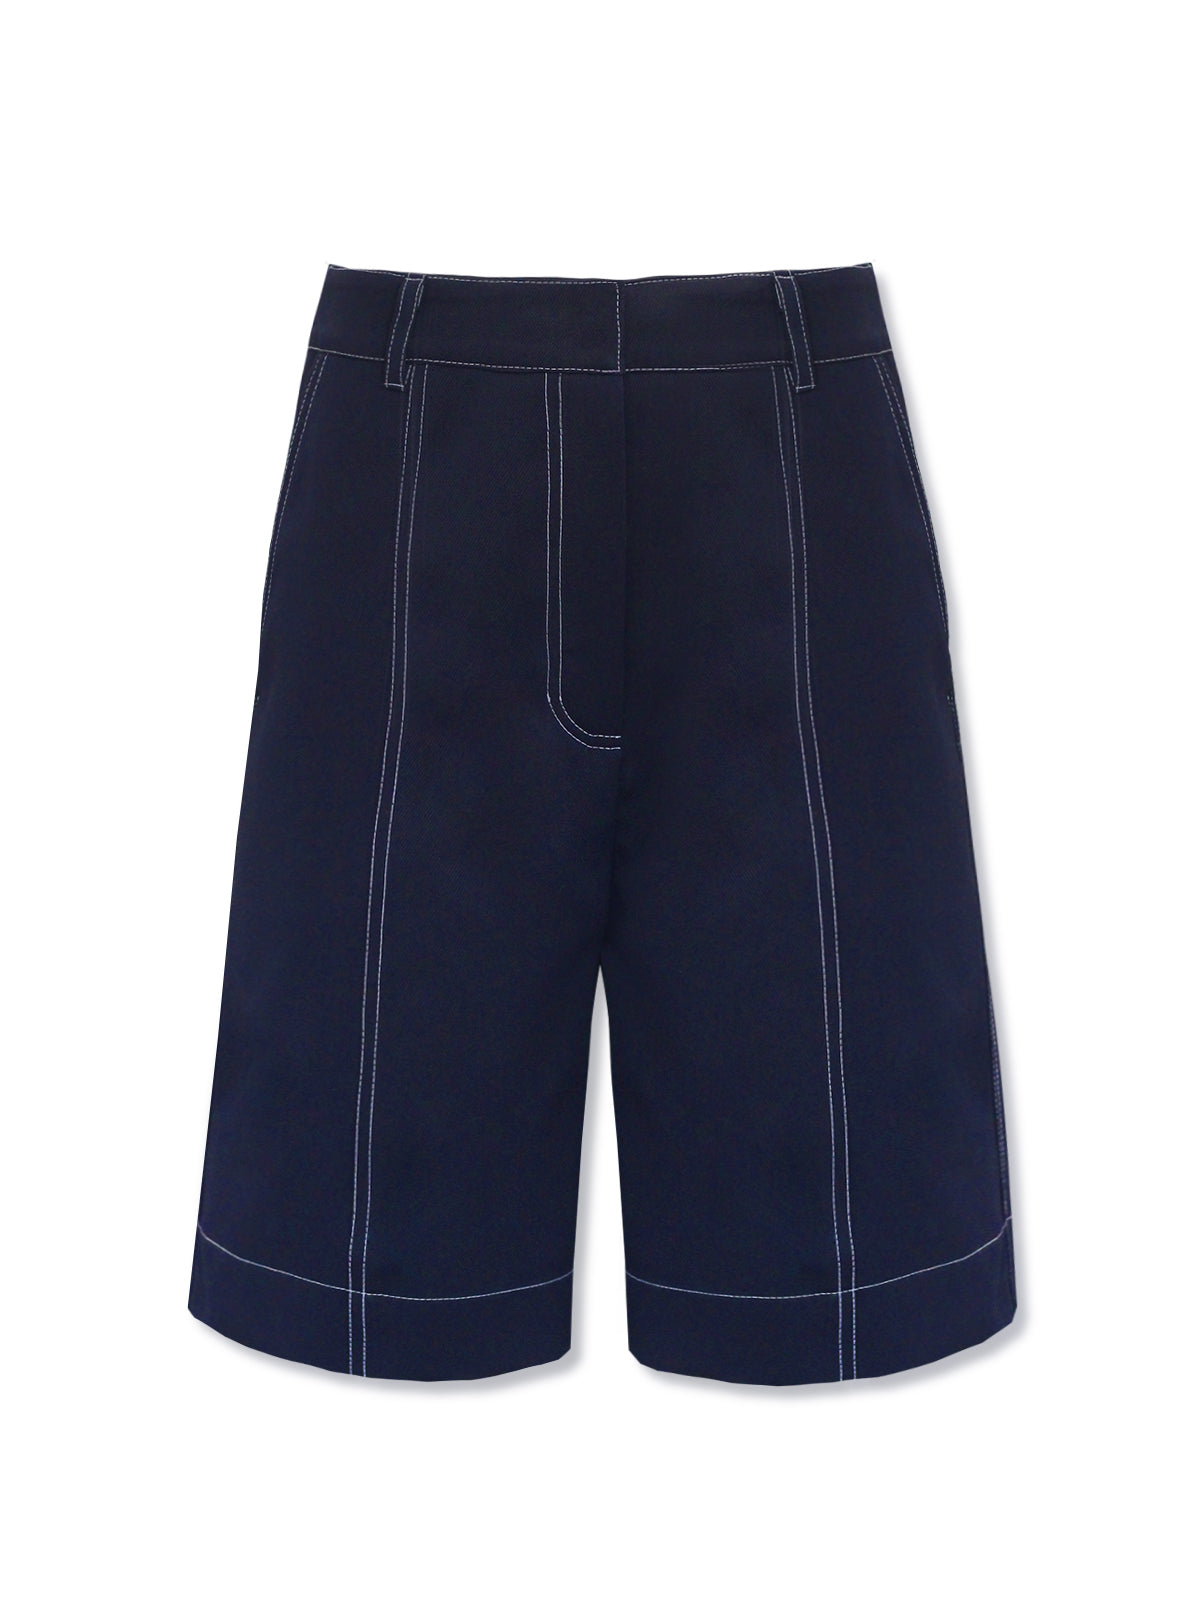 JOE bermuda shorts - navy